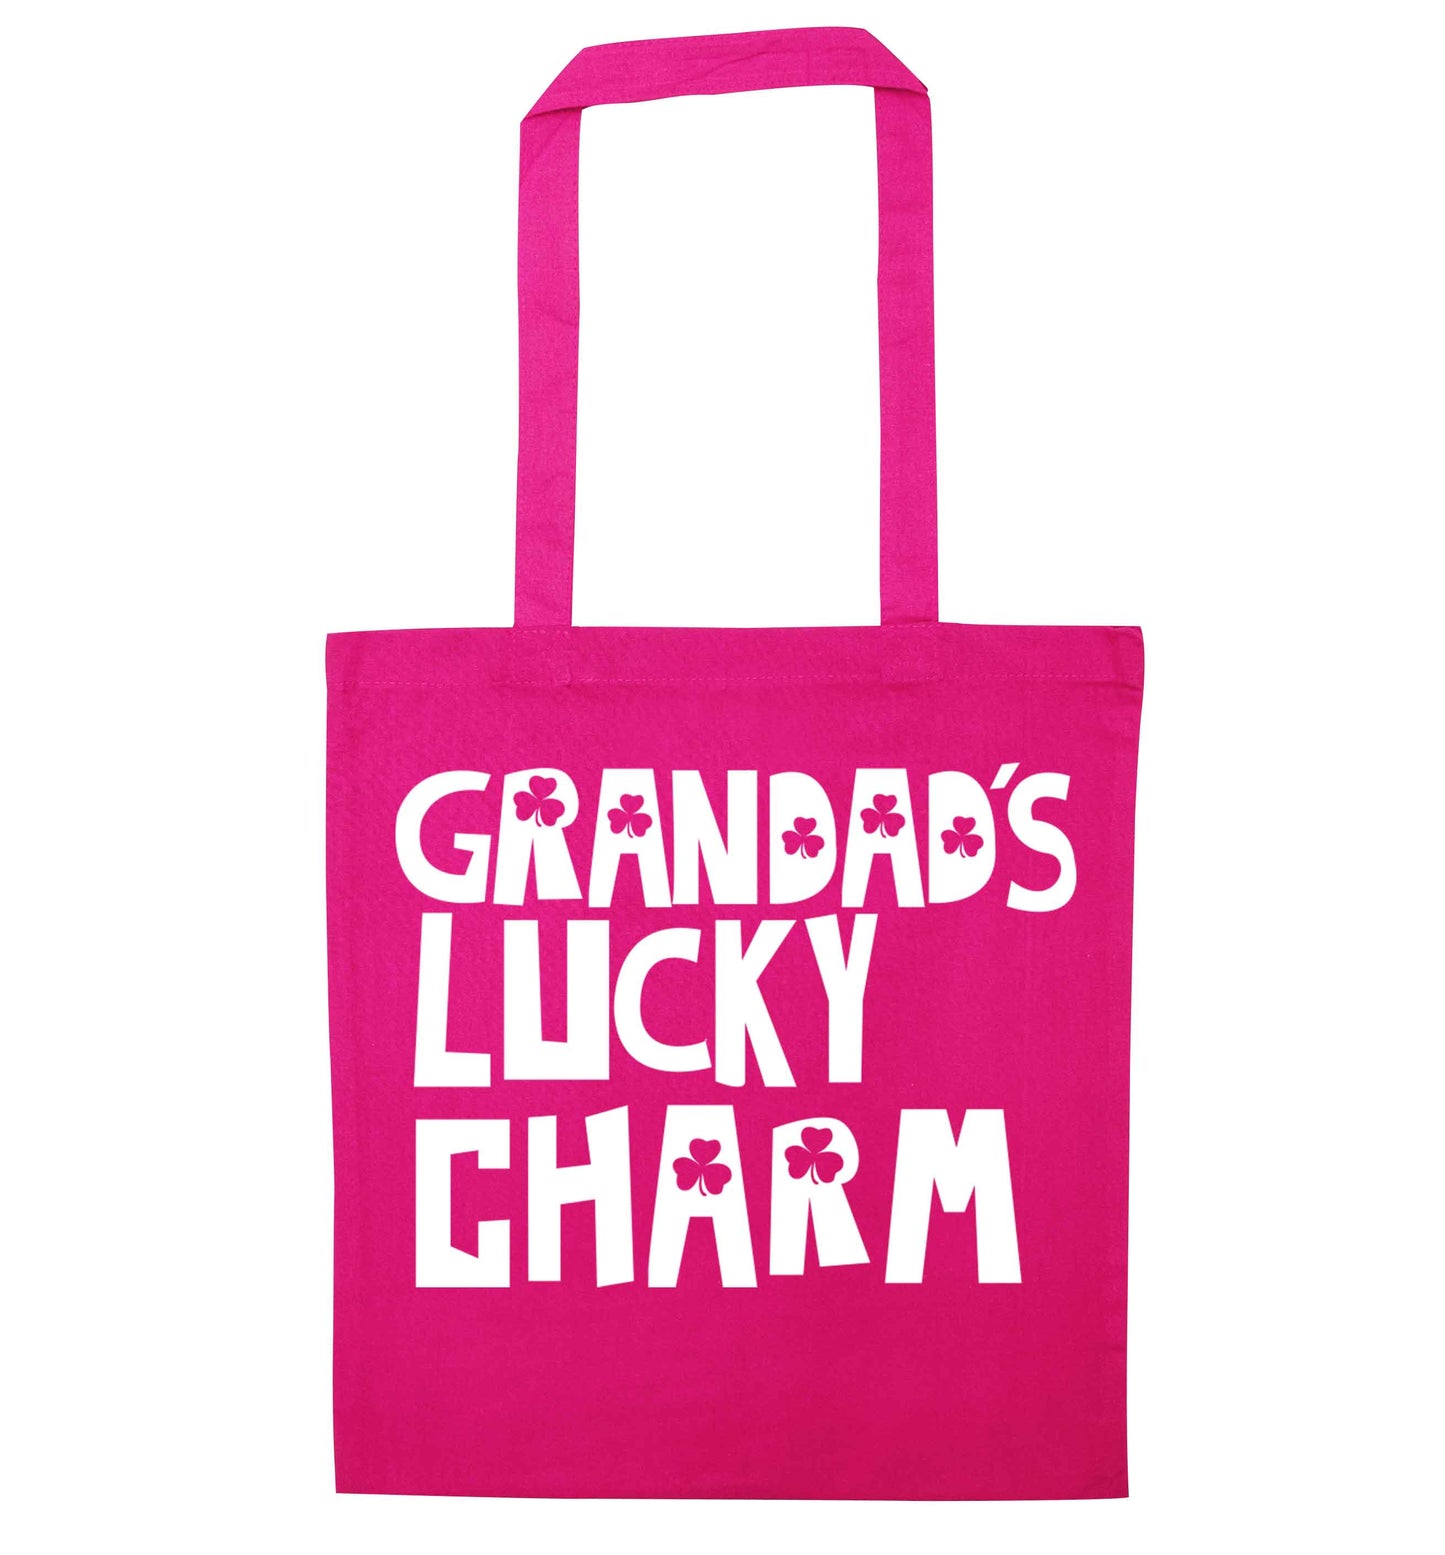 Grandad's lucky charm  pink tote bag